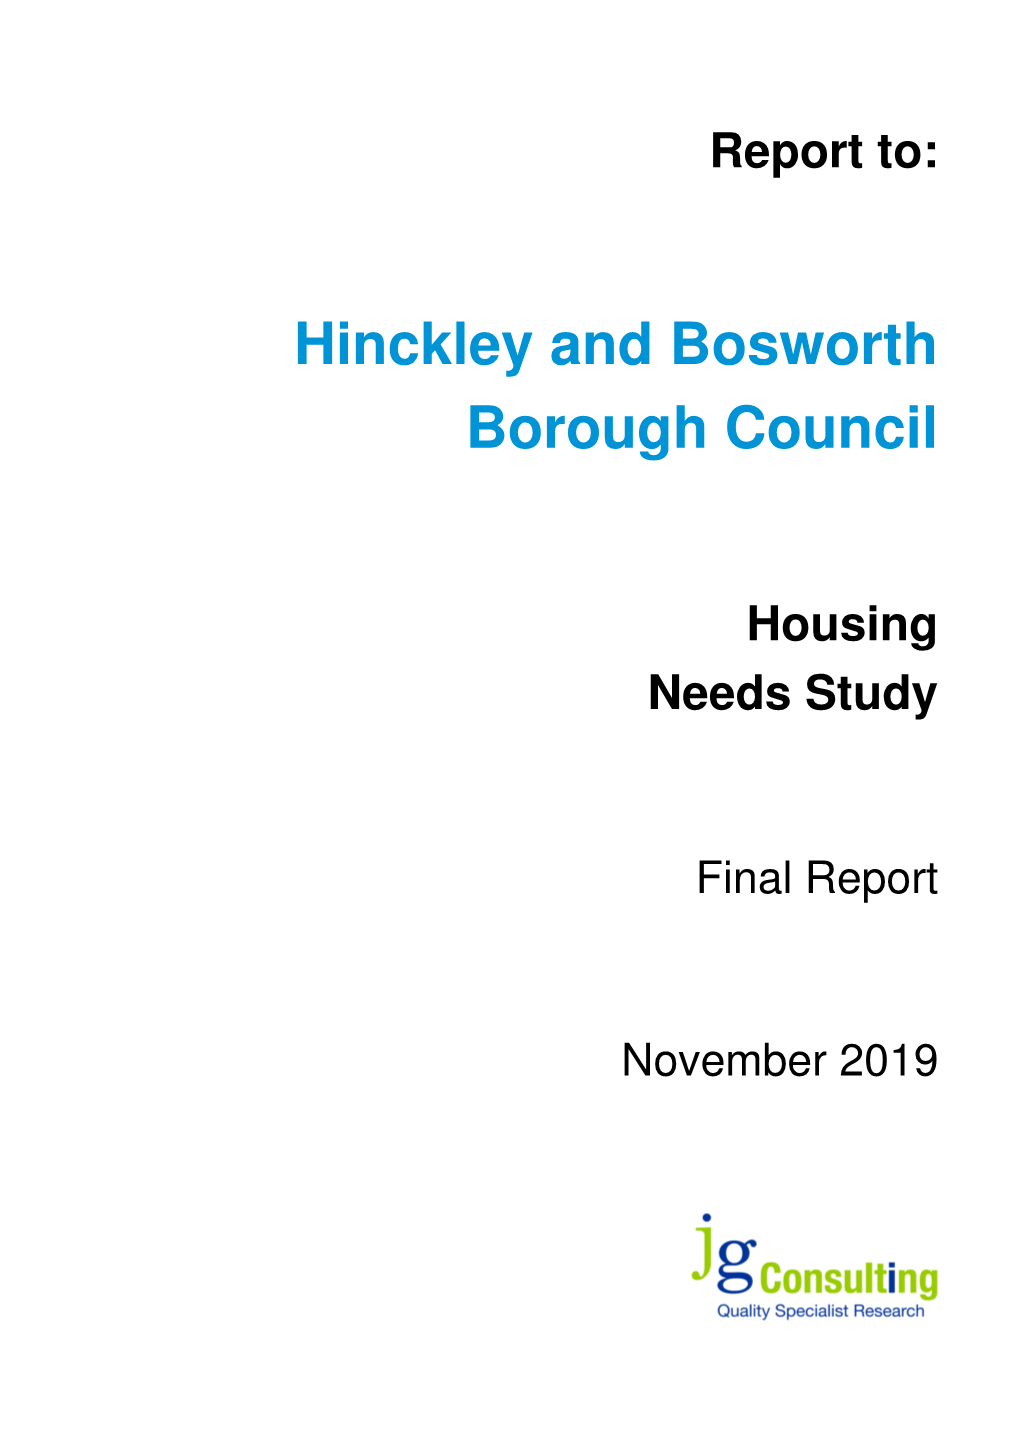 Housing Needs Study November 2019